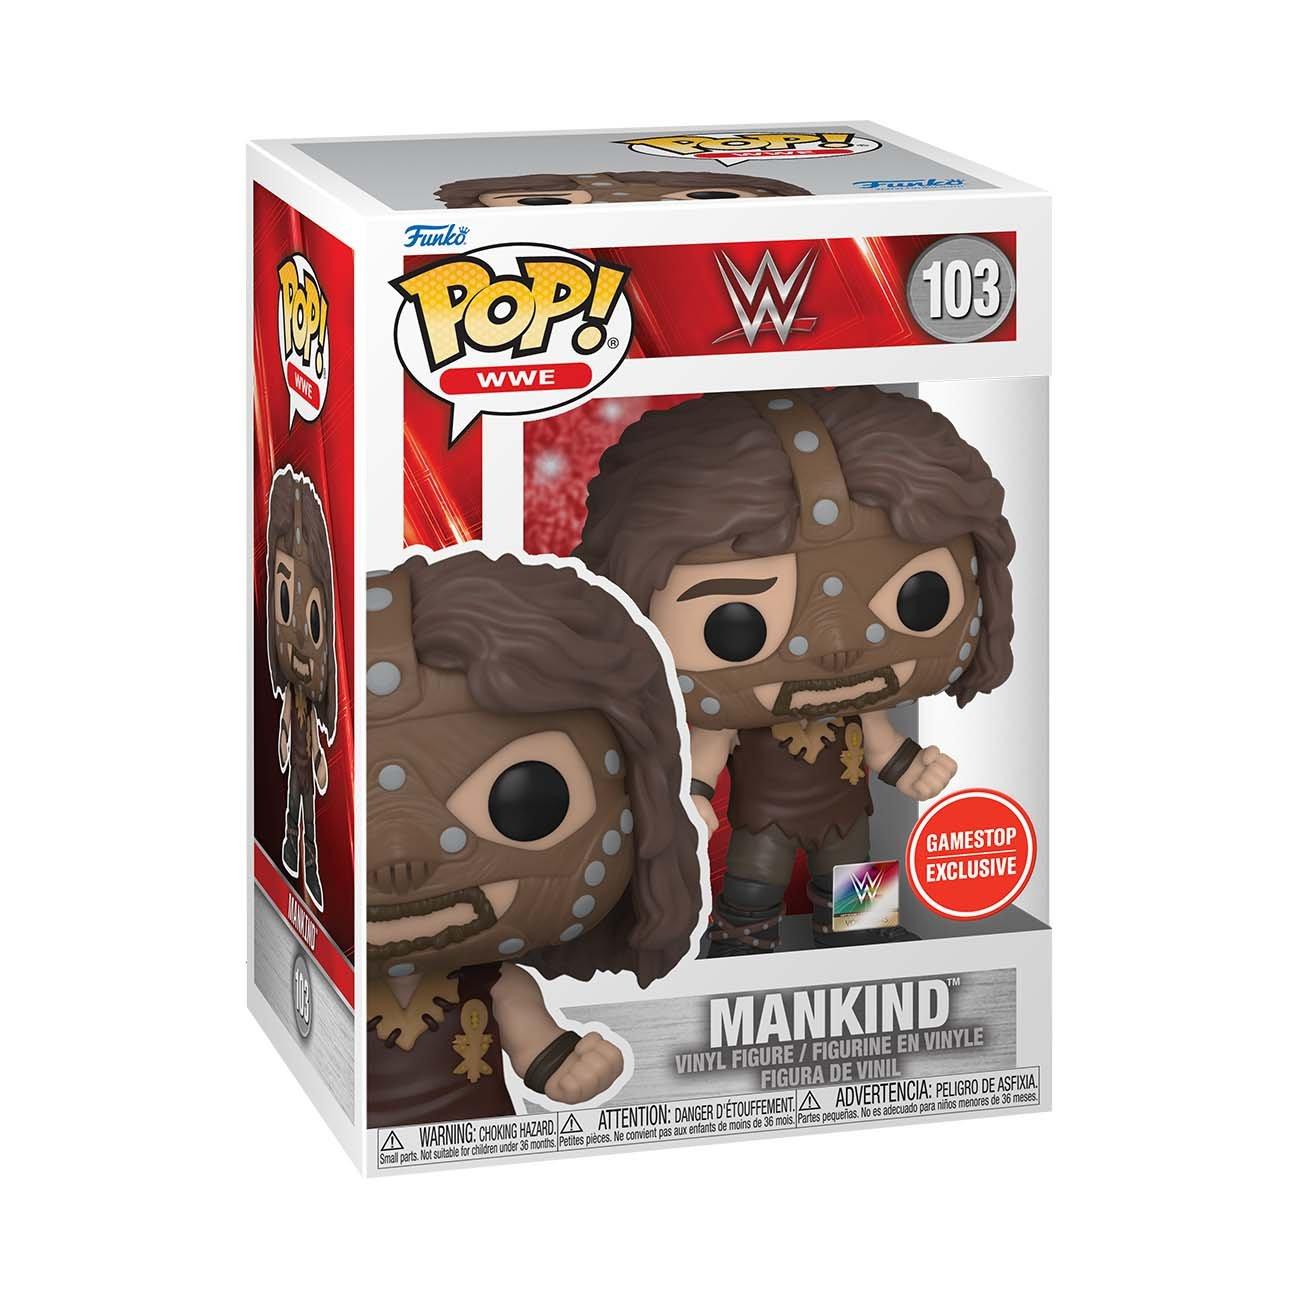 https://media.gamestop.com/i/gamestop/11156370_ALT06/Funko-WWE-Mankind-Collectors-Lunch-Box-and-Figure-Bundle-GameStop-Exclusive?$pdp$